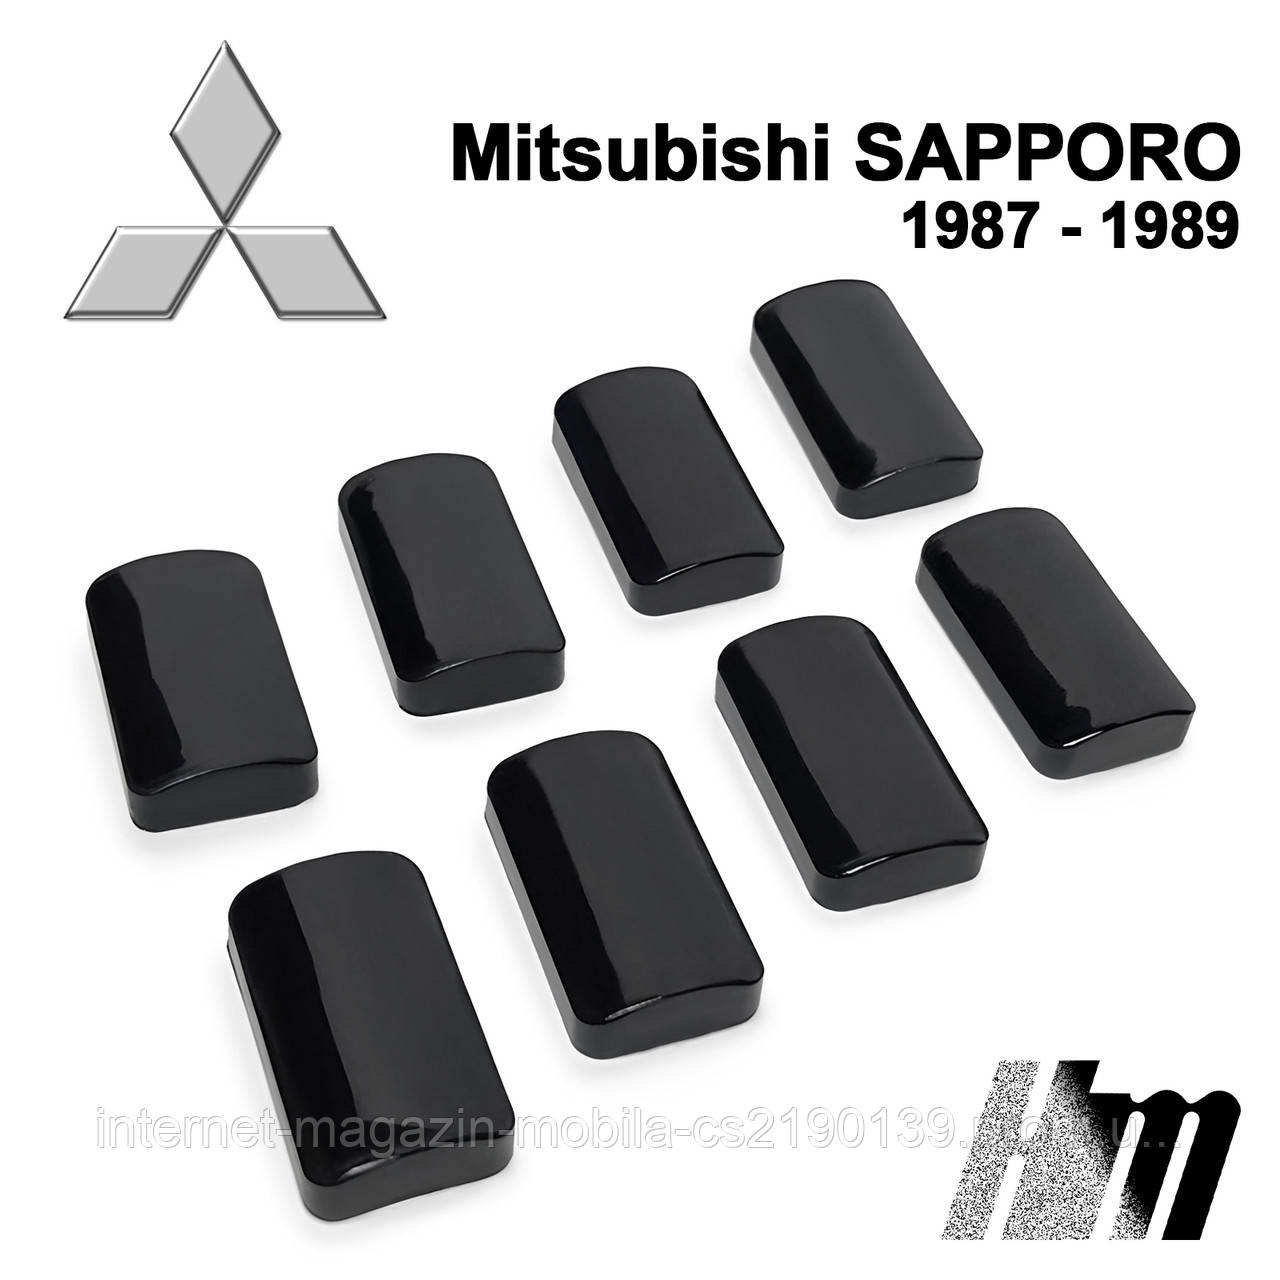 Ремкомплект обмежувача дверей Mitsubishi SAPPORO 1987 — 1989, фіксатори, вкладки, втулки